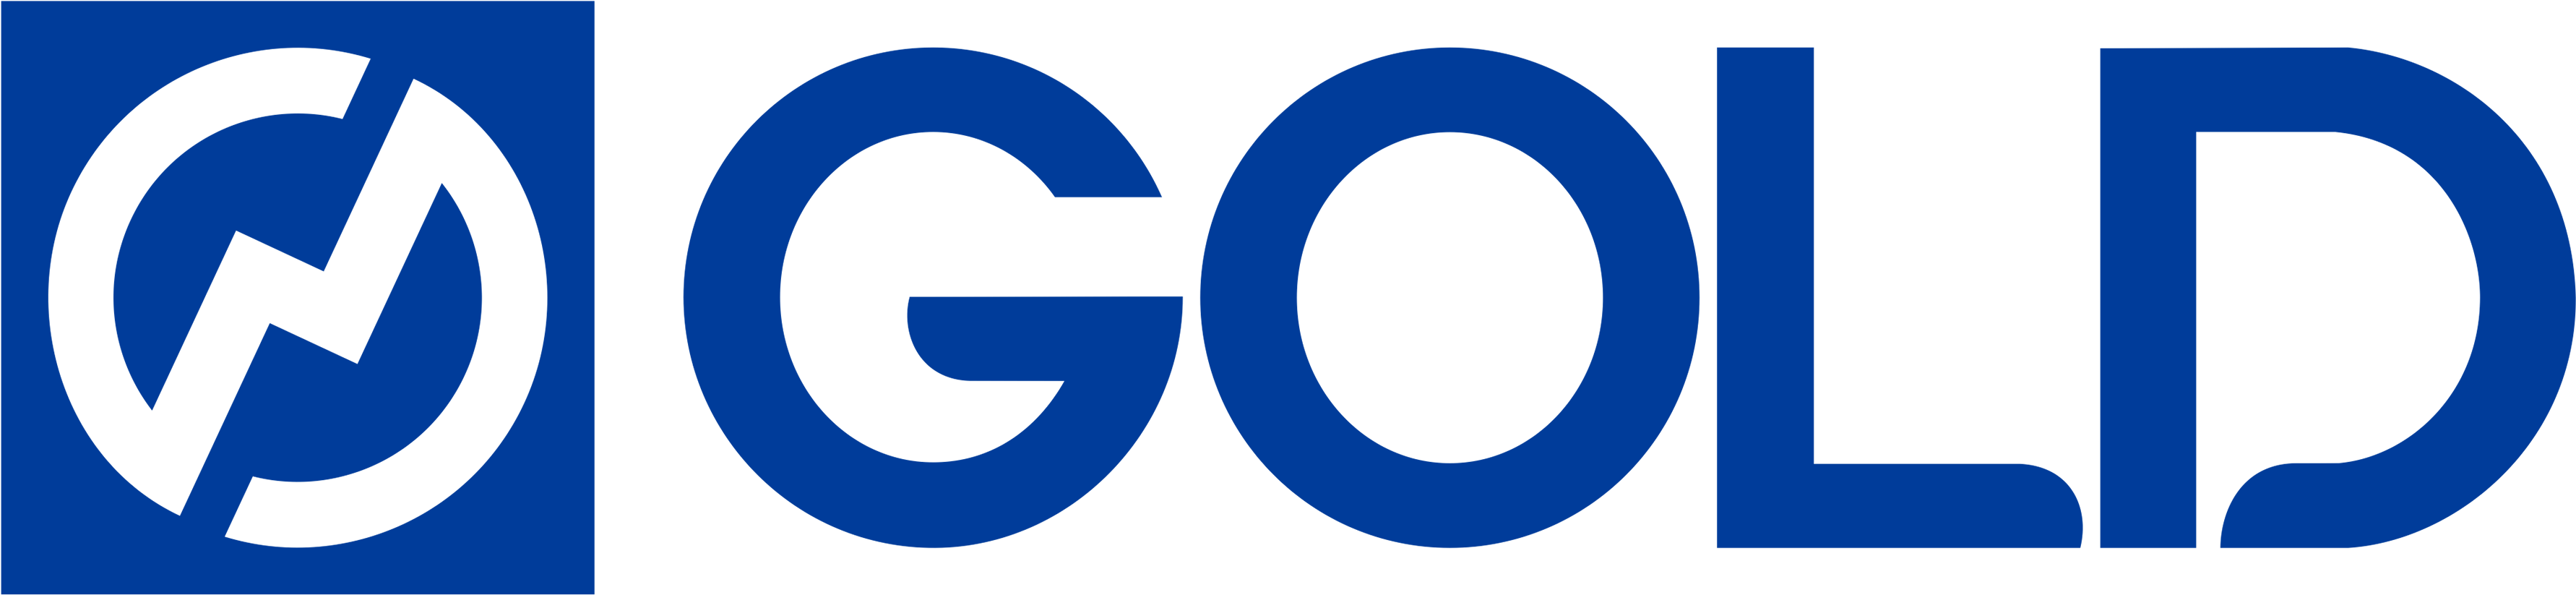 Gold Campany Logo - Product (5034x875)